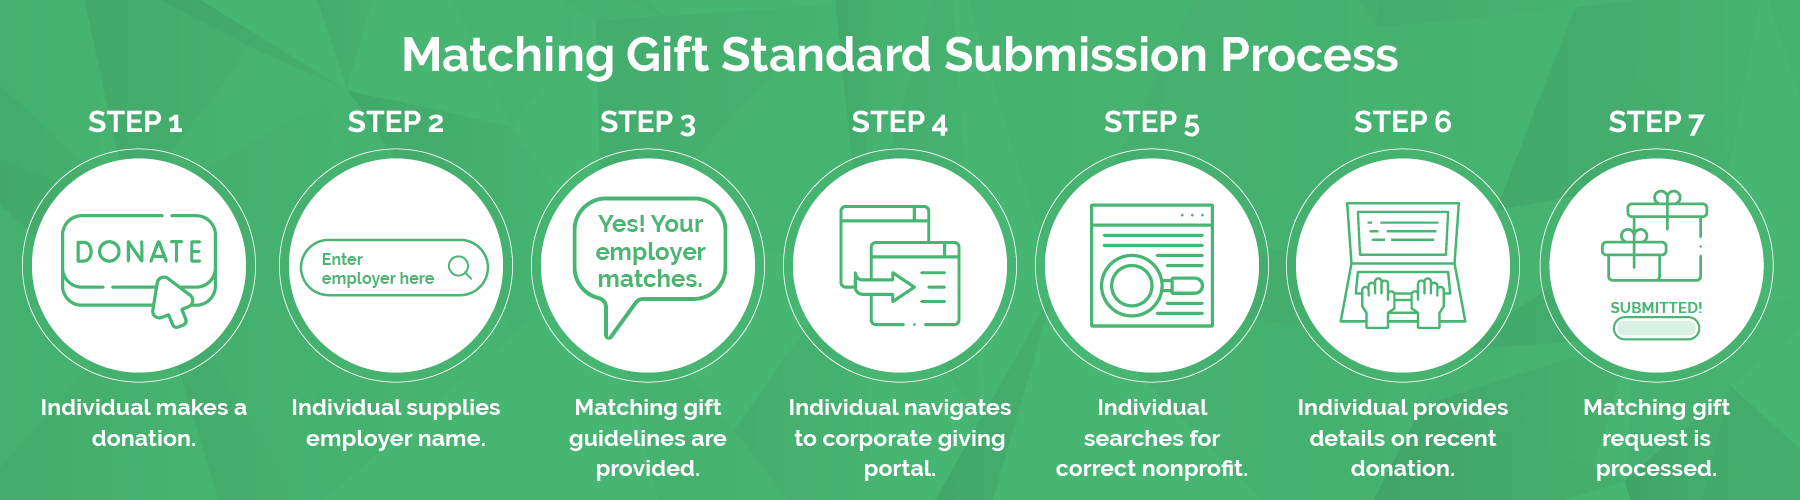 Matching gift disbursement - standard submission process